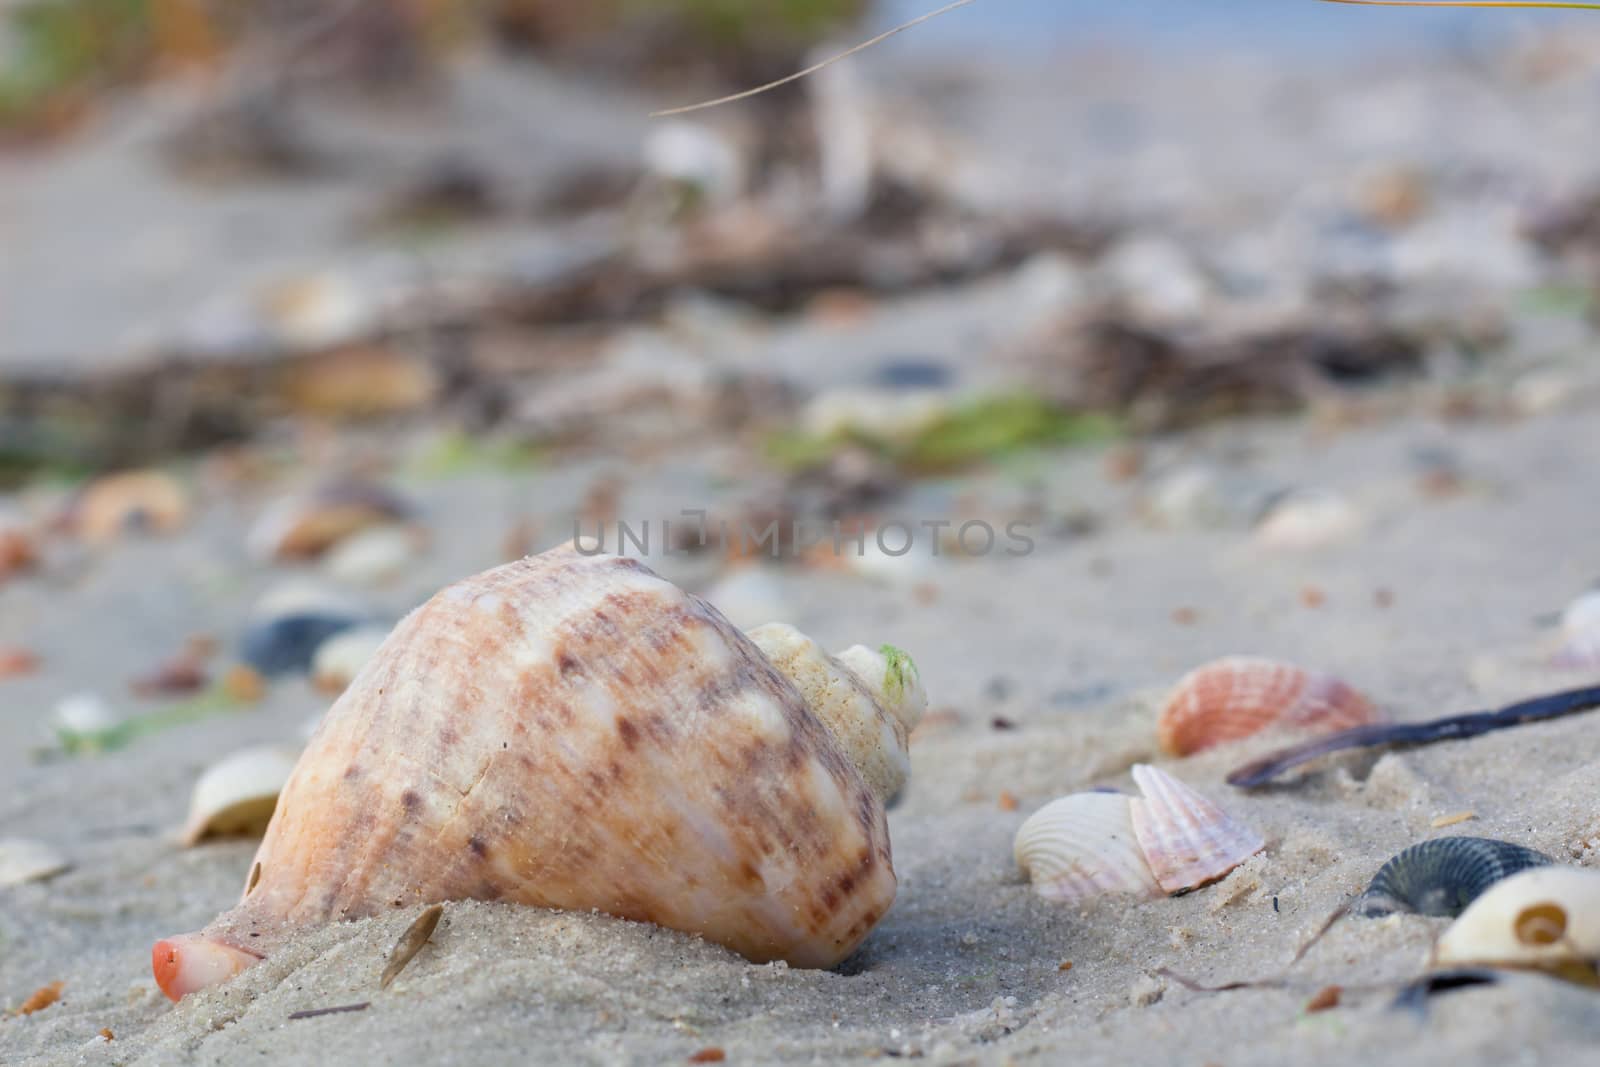 Big seashell, clams on coastal sands, sandy beach seascape by VeraVerano